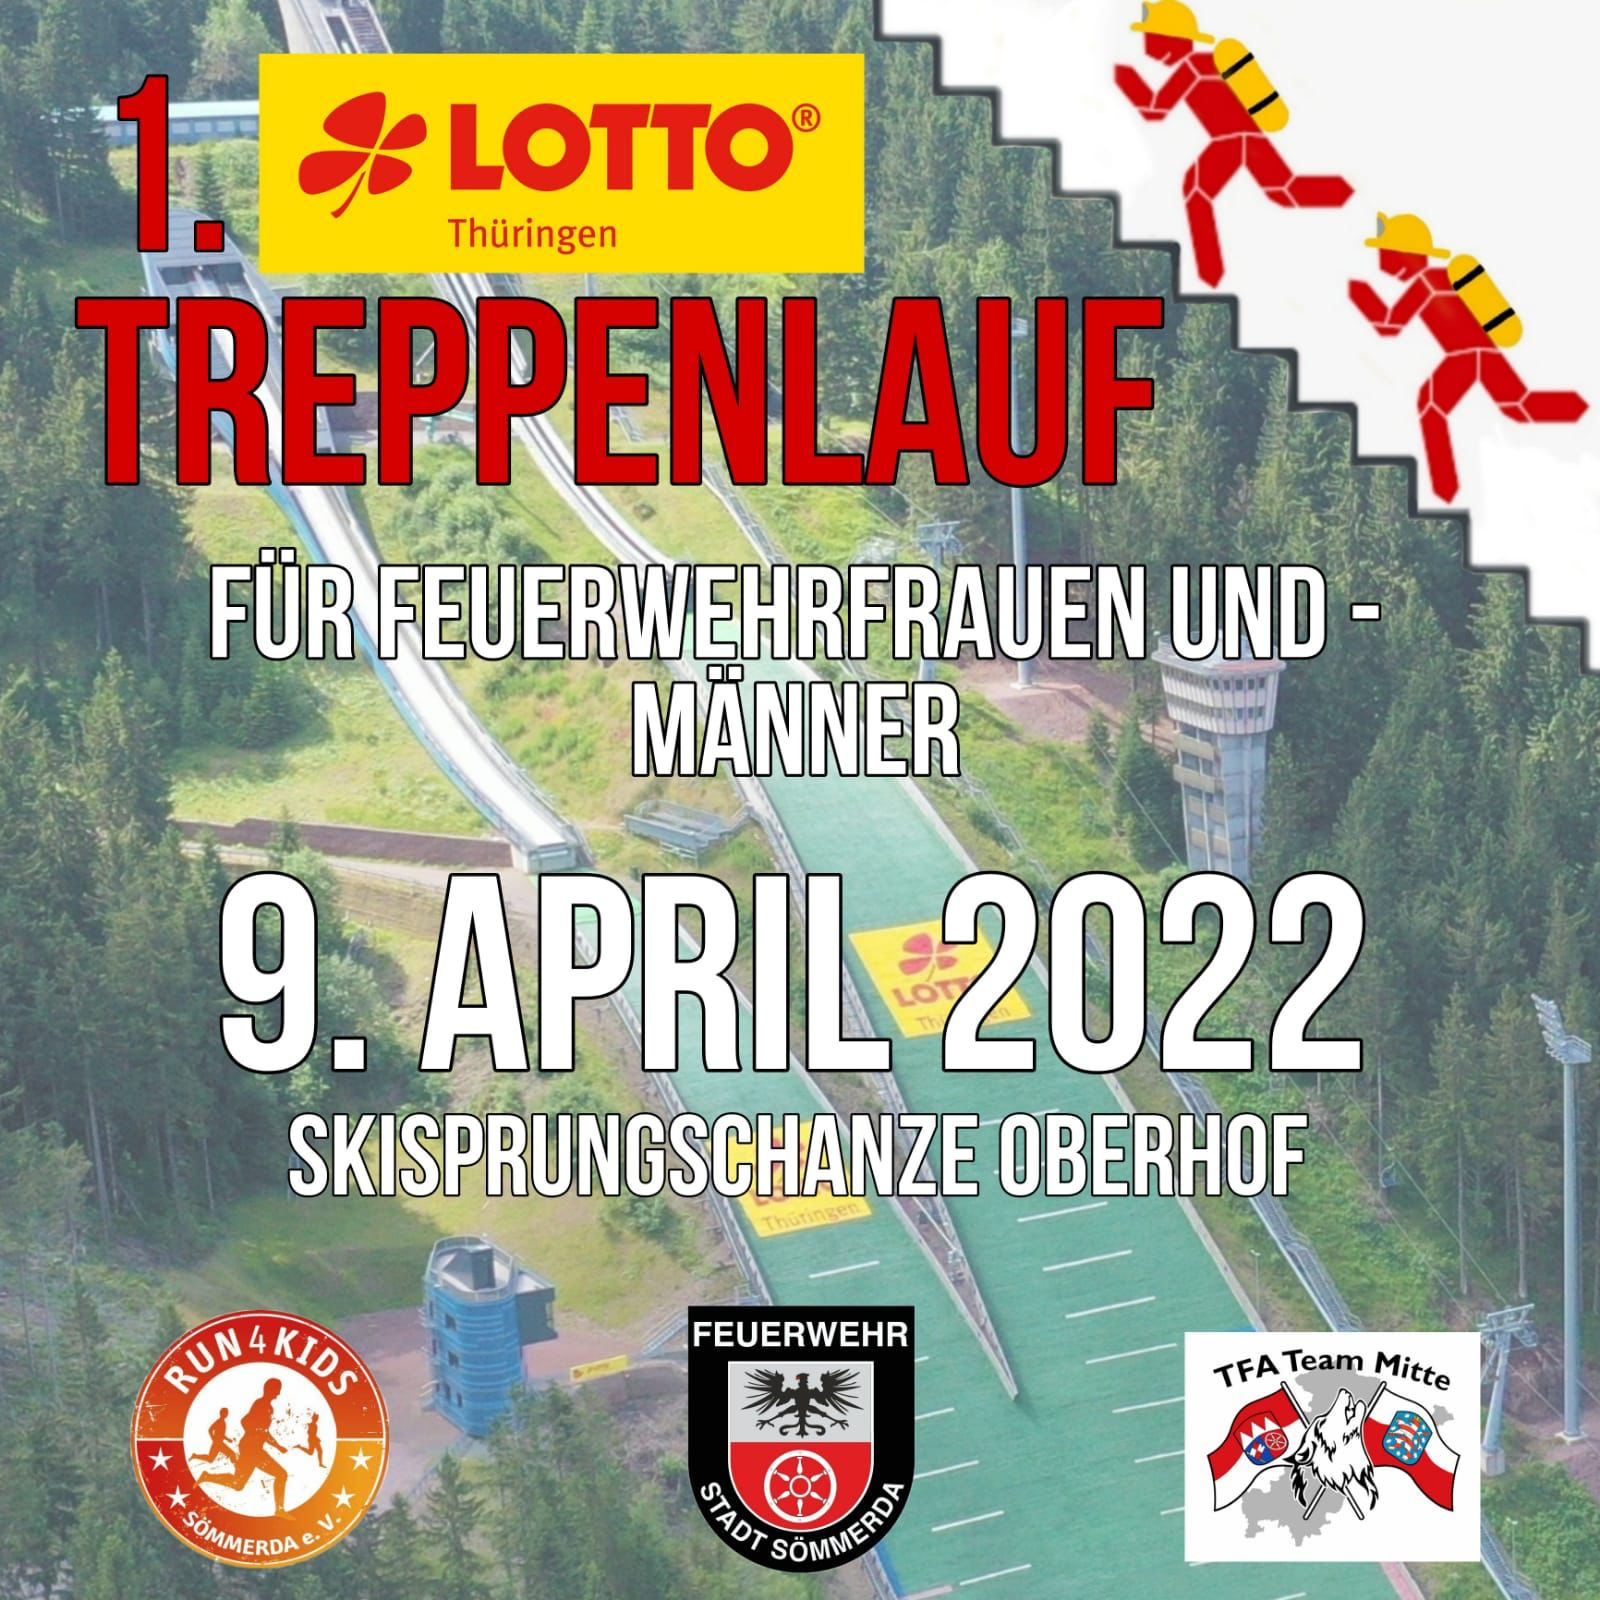 Plakat Treppenlauf Mit Lotto Thüringen